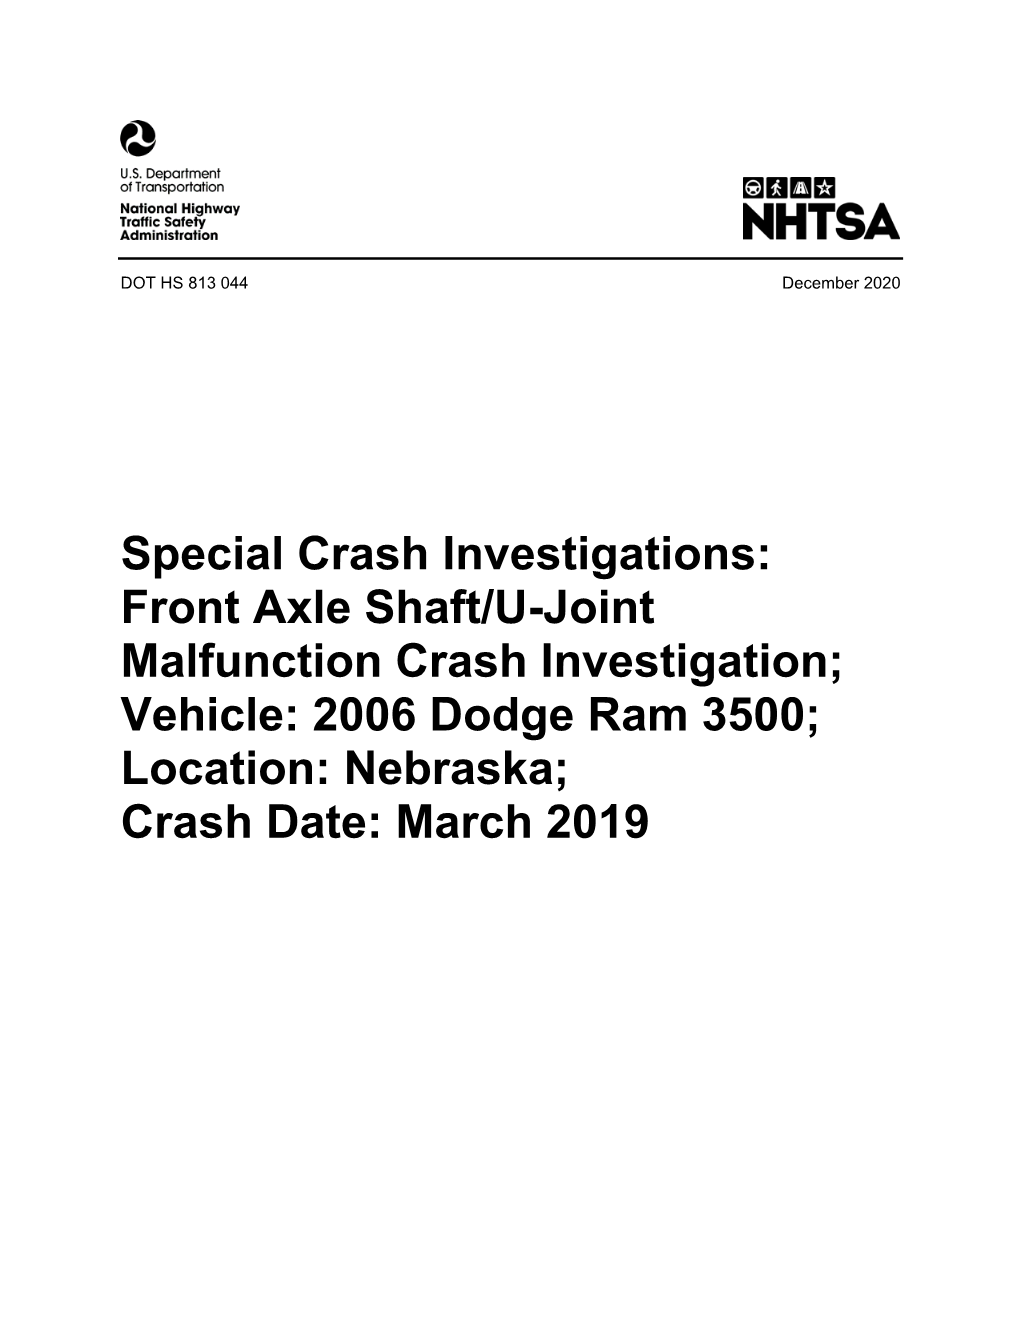 2006 Dodge Ram 3500; Location: Nebraska; Crash Date: March 2019